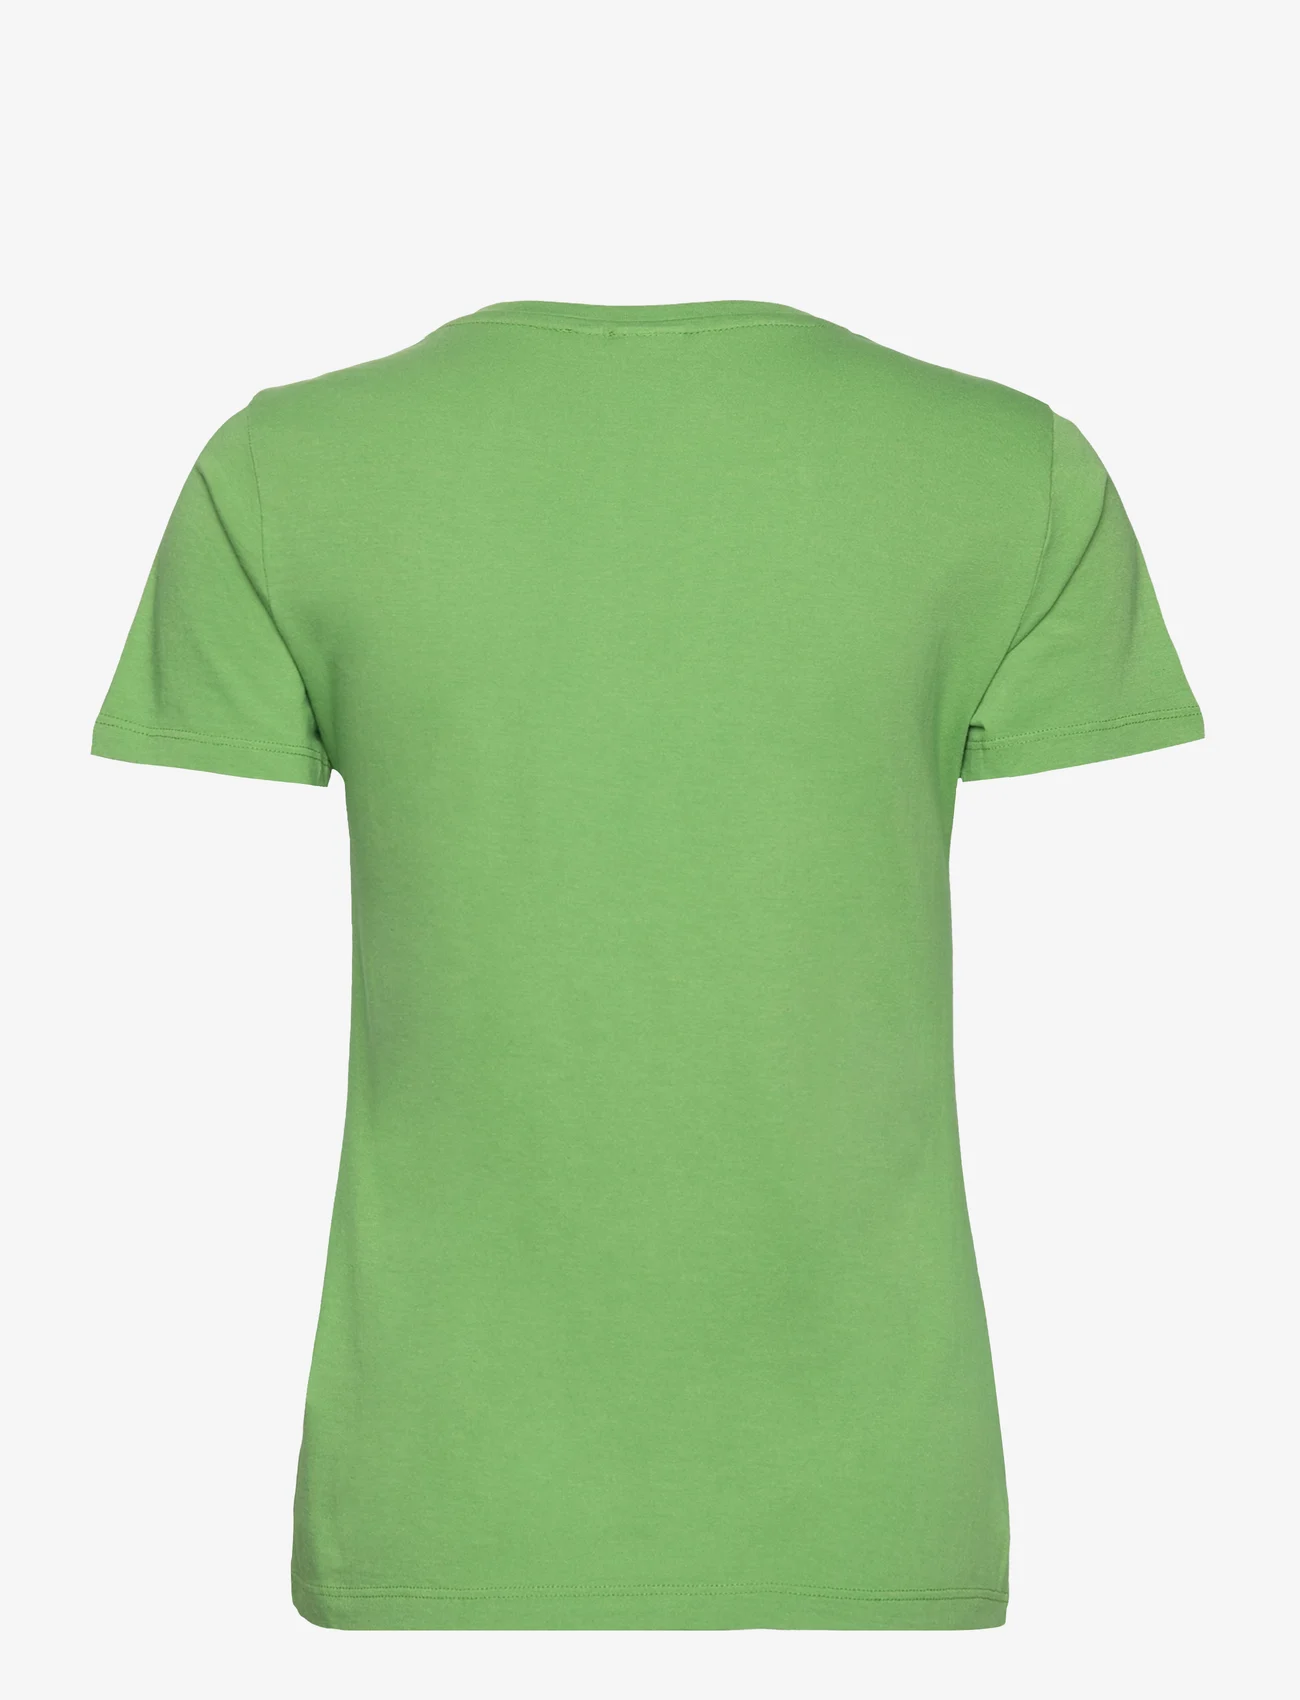 Cream - Naia Tshirt - zemākās cenas - flourite green - 1